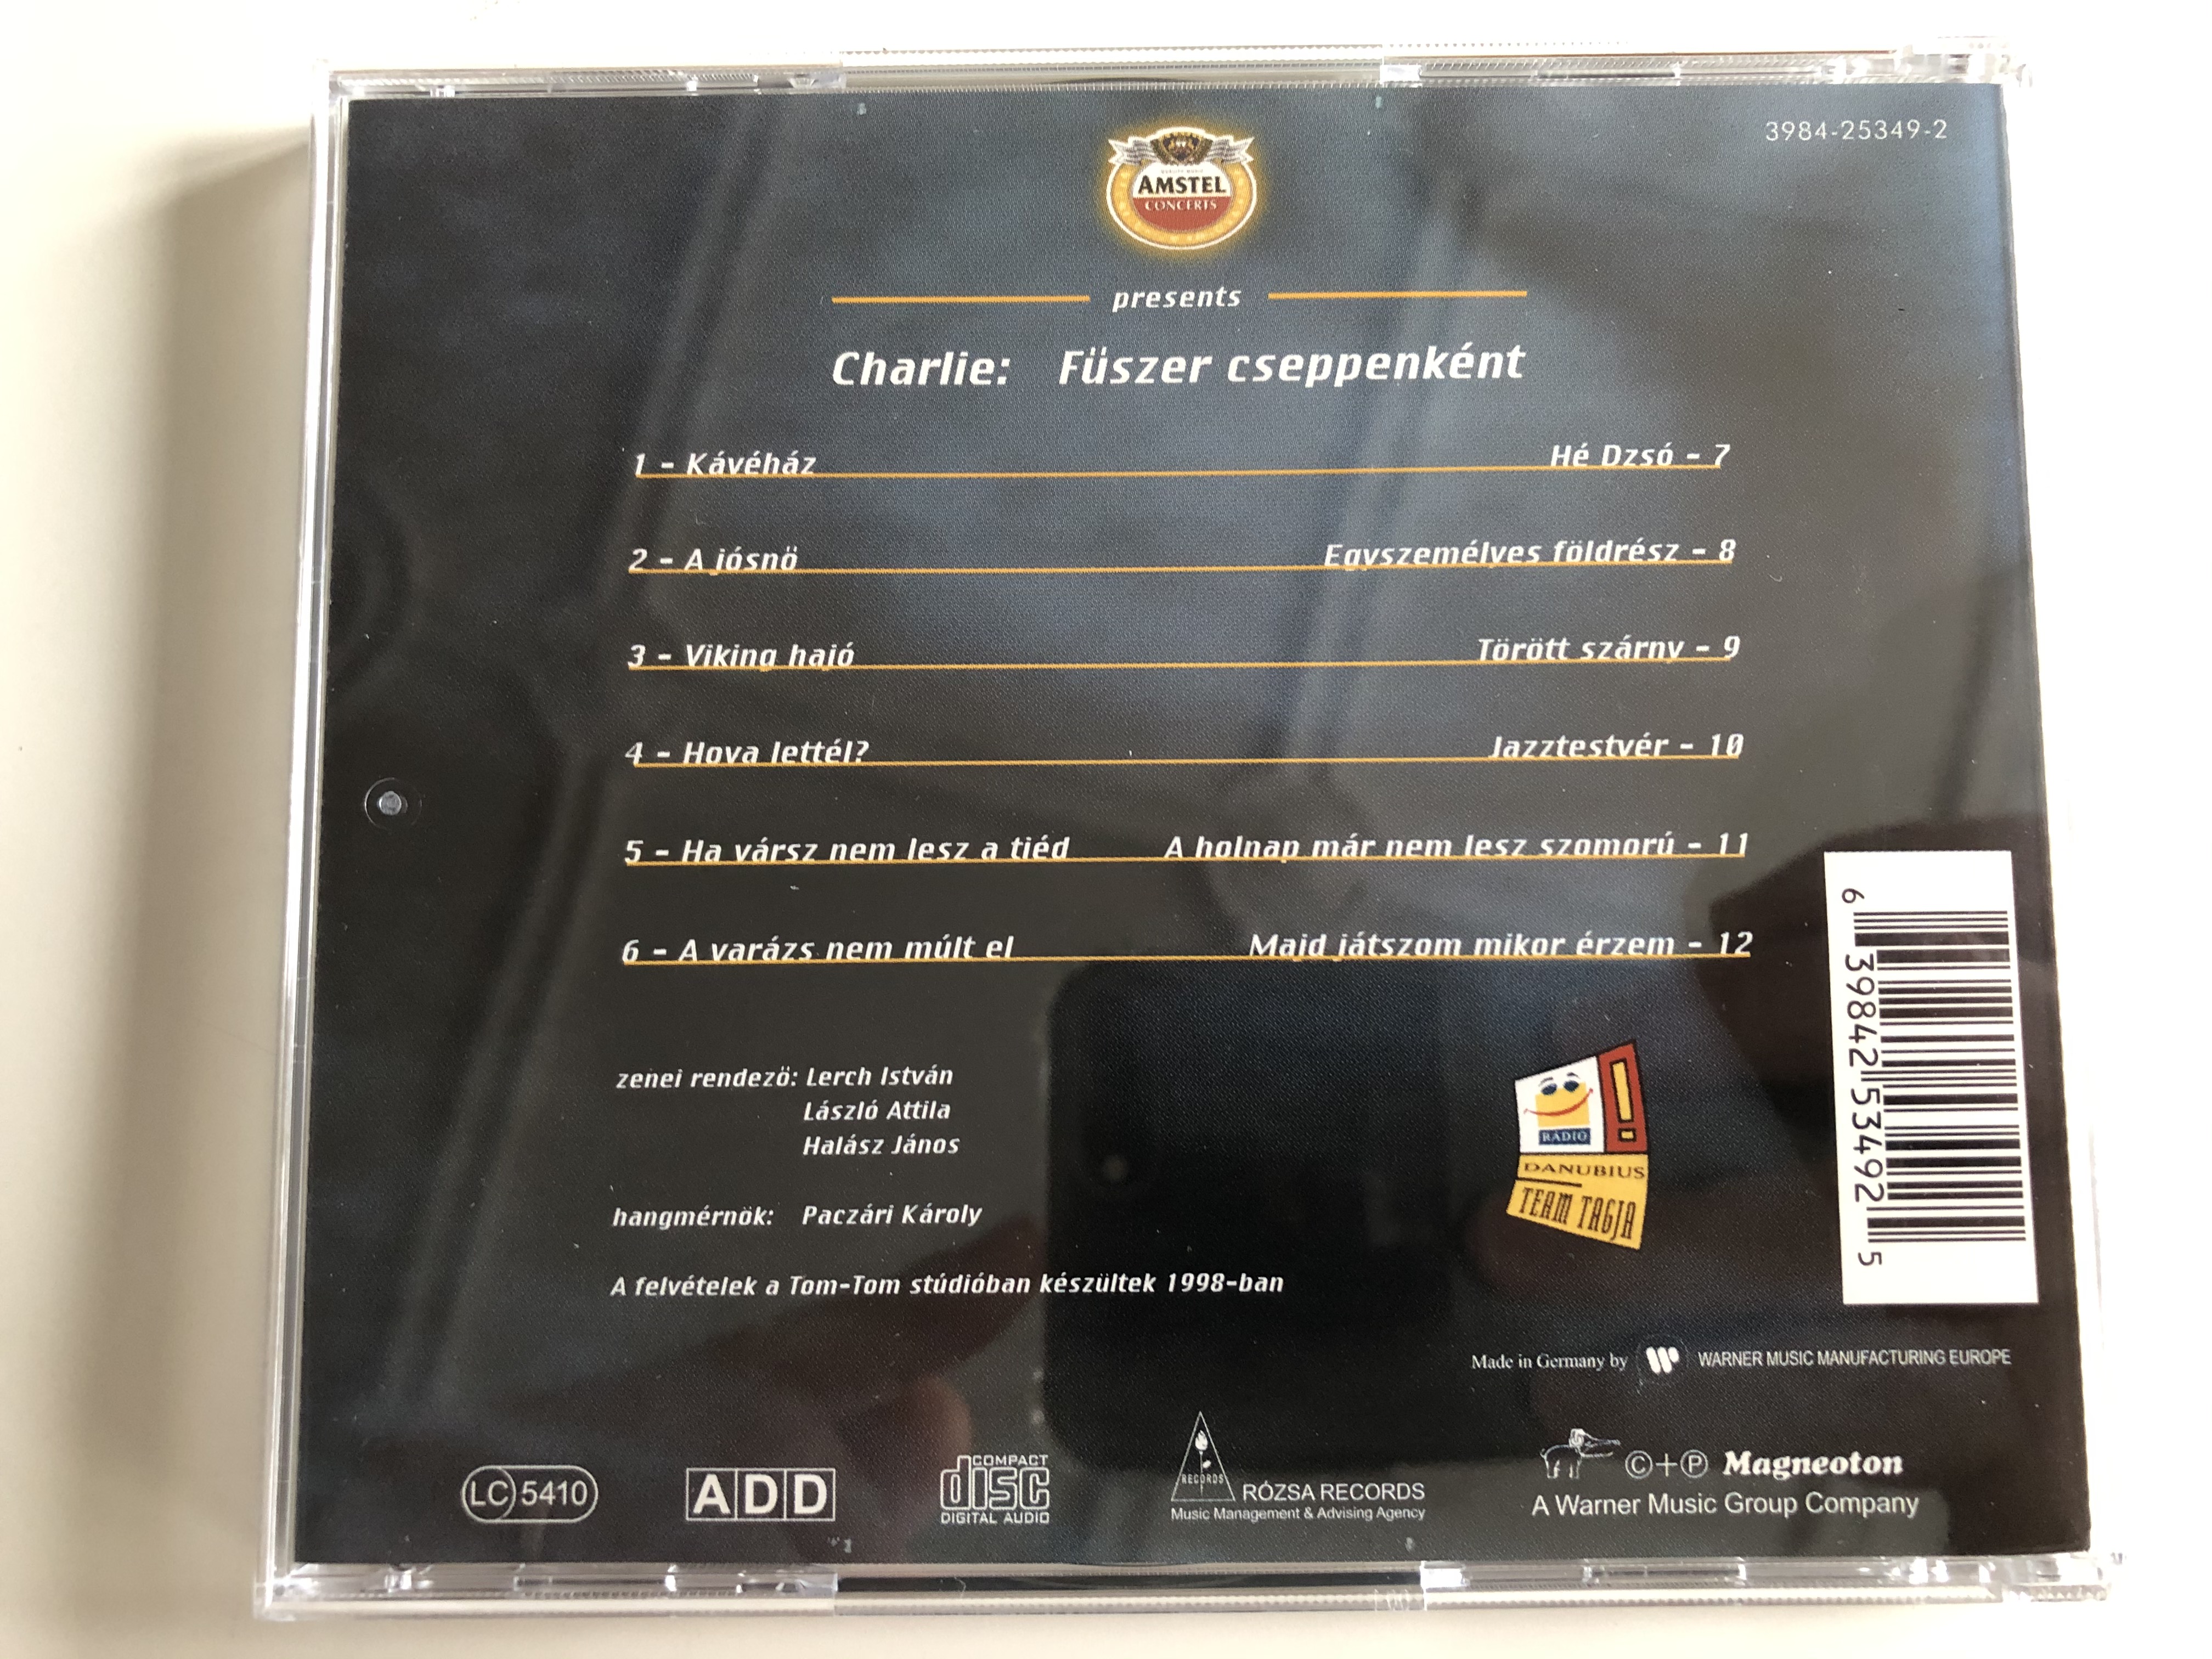 charlie-f-szer-cseppenk-nt-magneoton-audio-cd-1998-3984-25349-2-11-.jpg